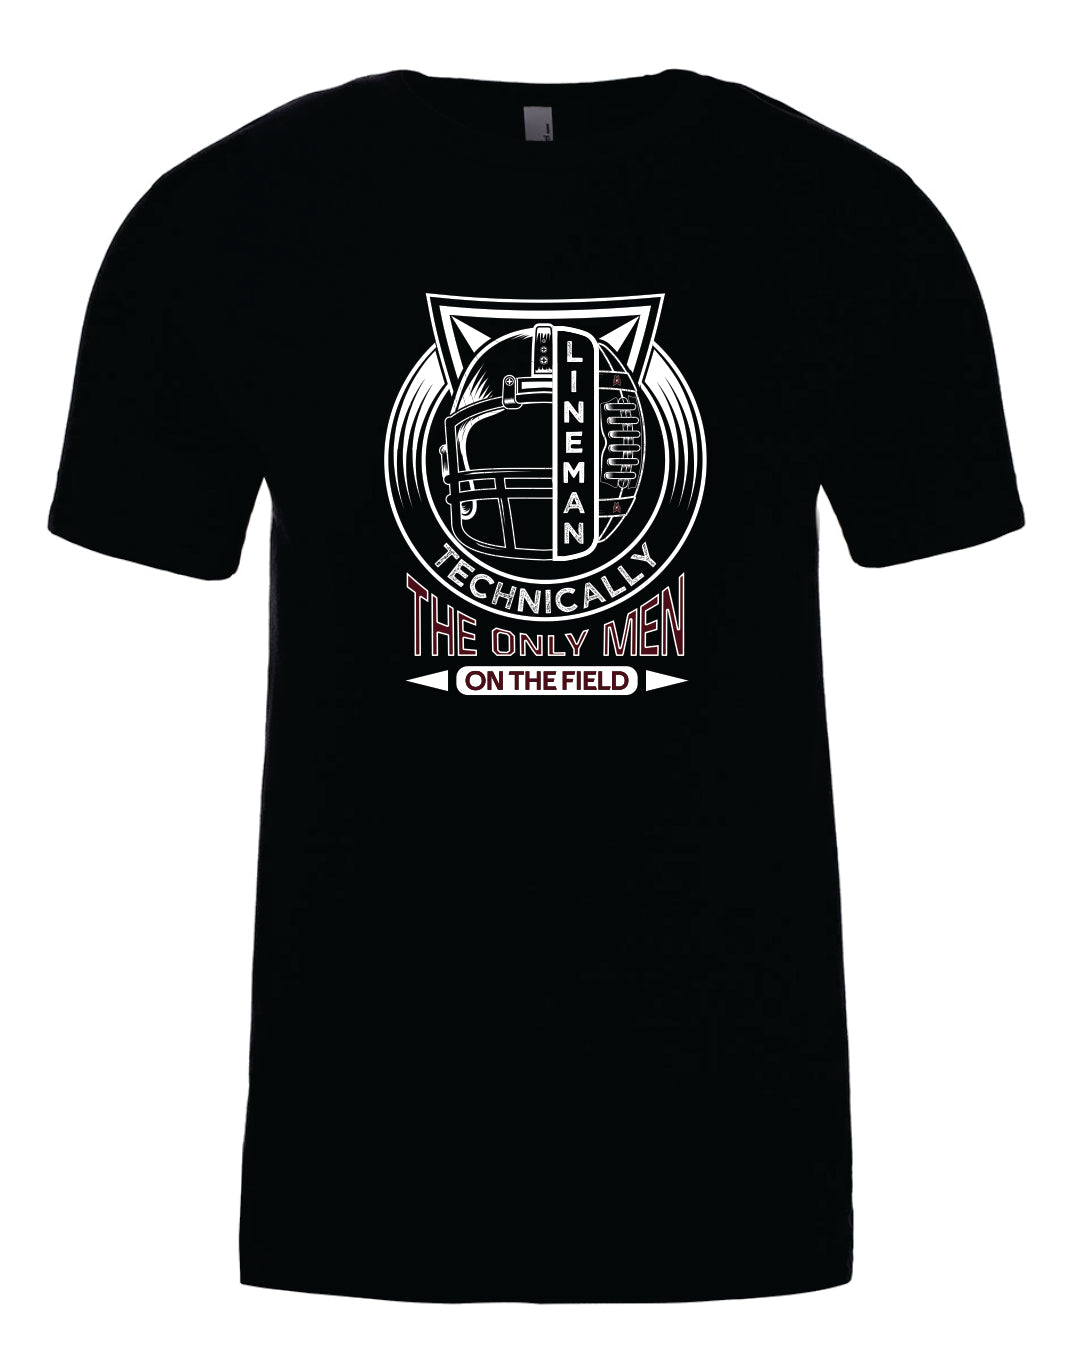 MW Lineman T-shirt